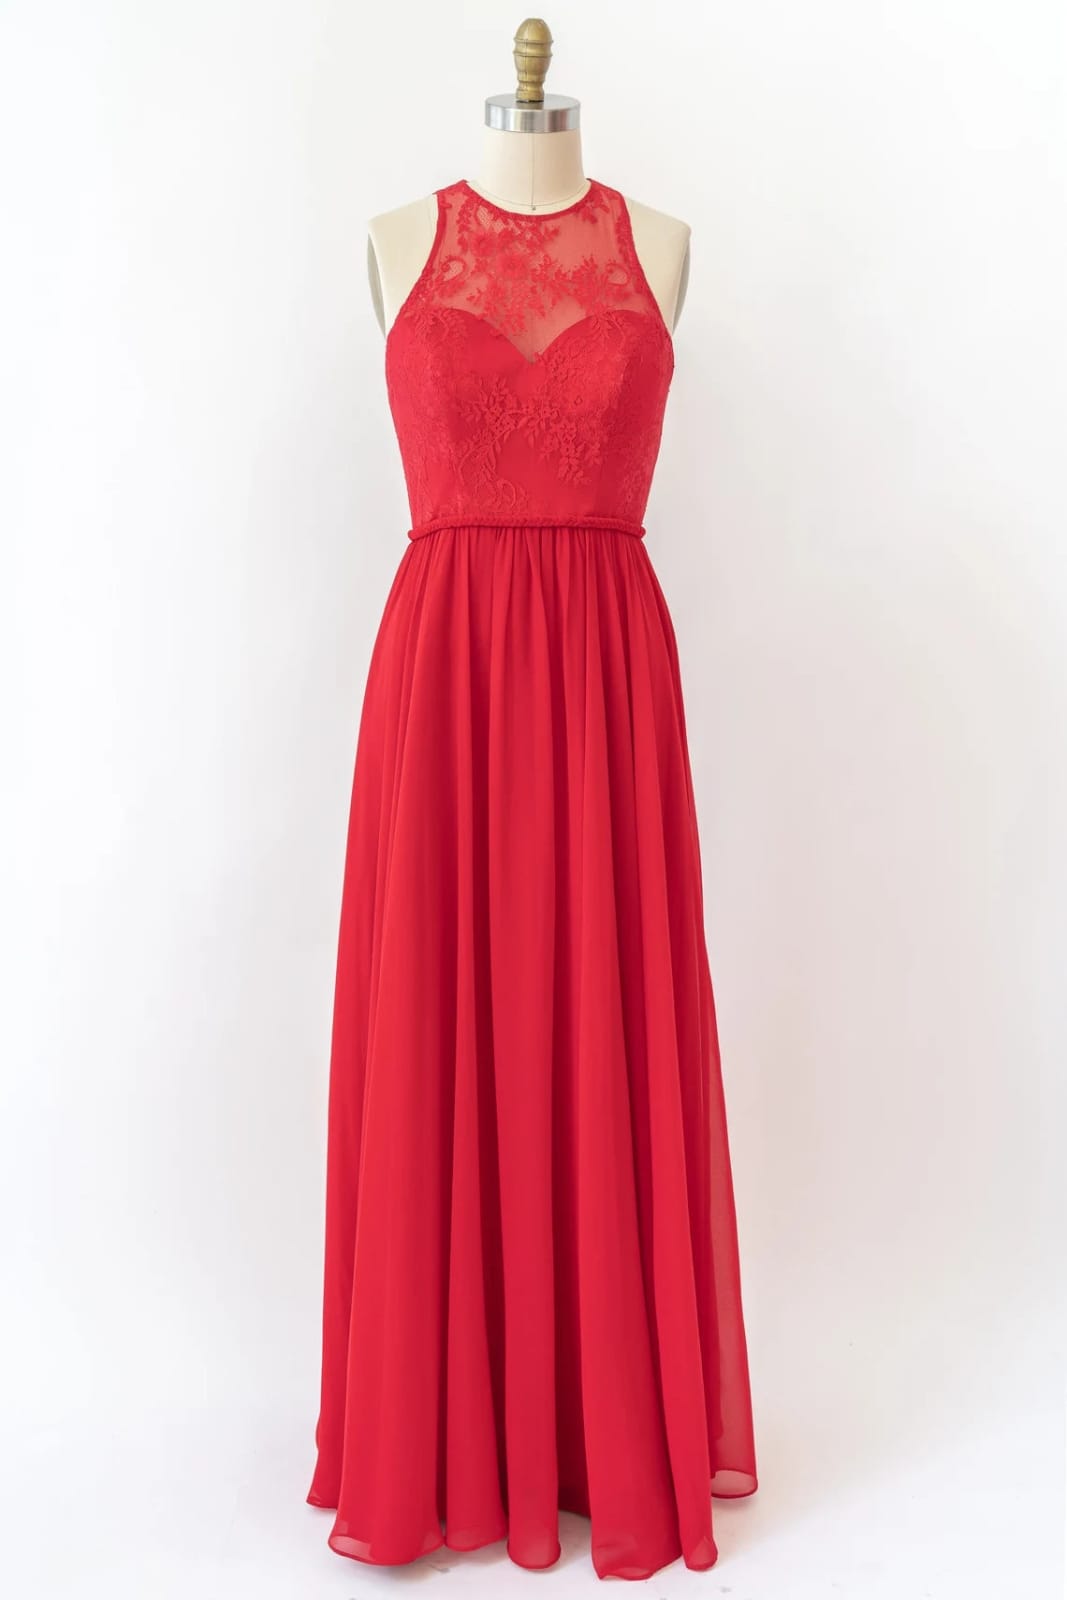 Halter Sleeveless Lace Chiffon Long Red Bridesmaid Dress, Braided Belt